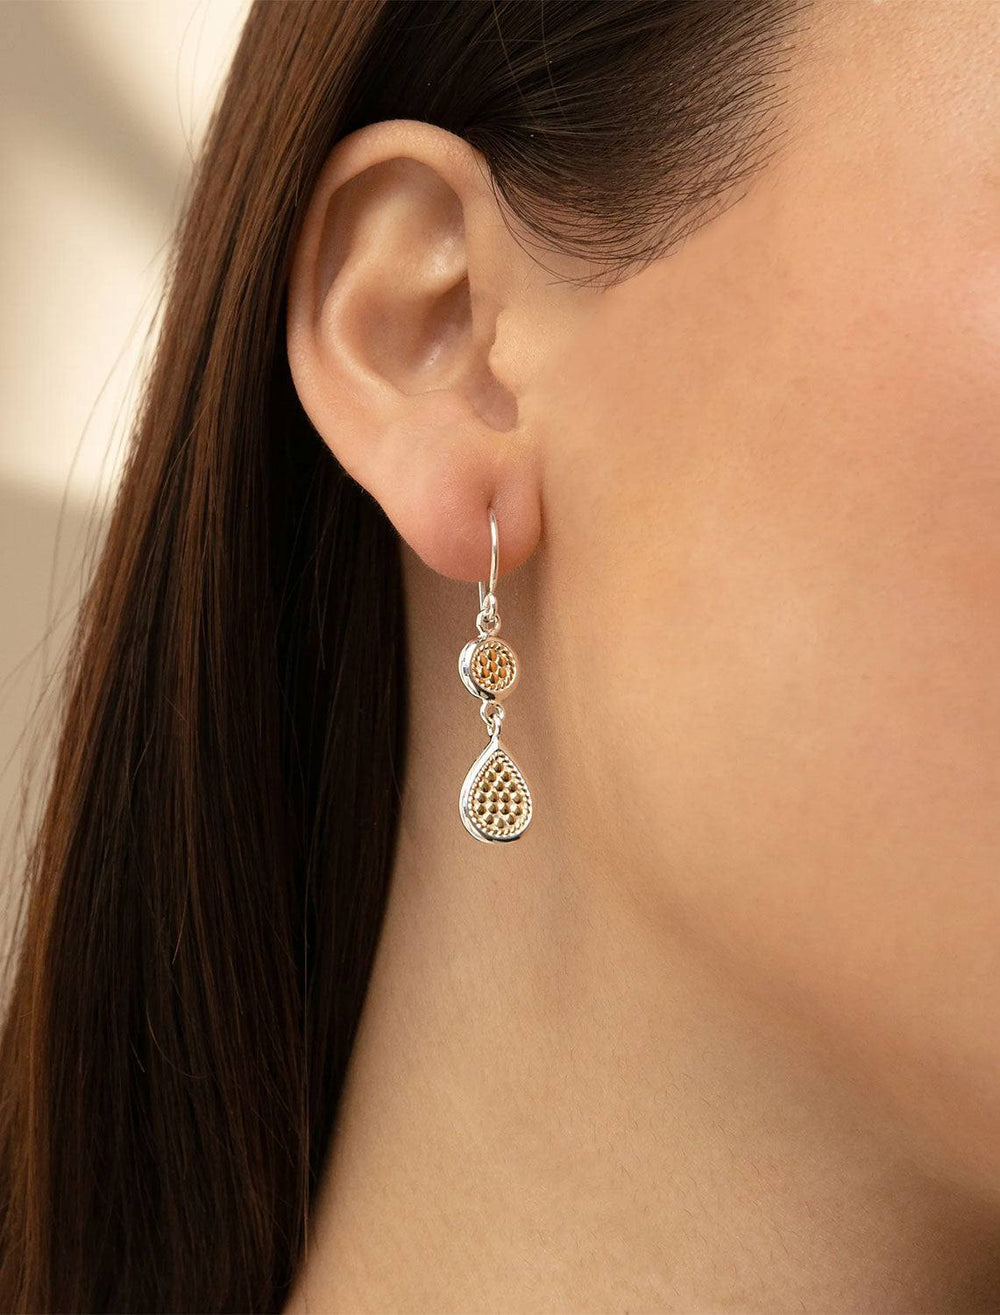 Model wearing Anna Beck's classic double drop earrings in two-tone.